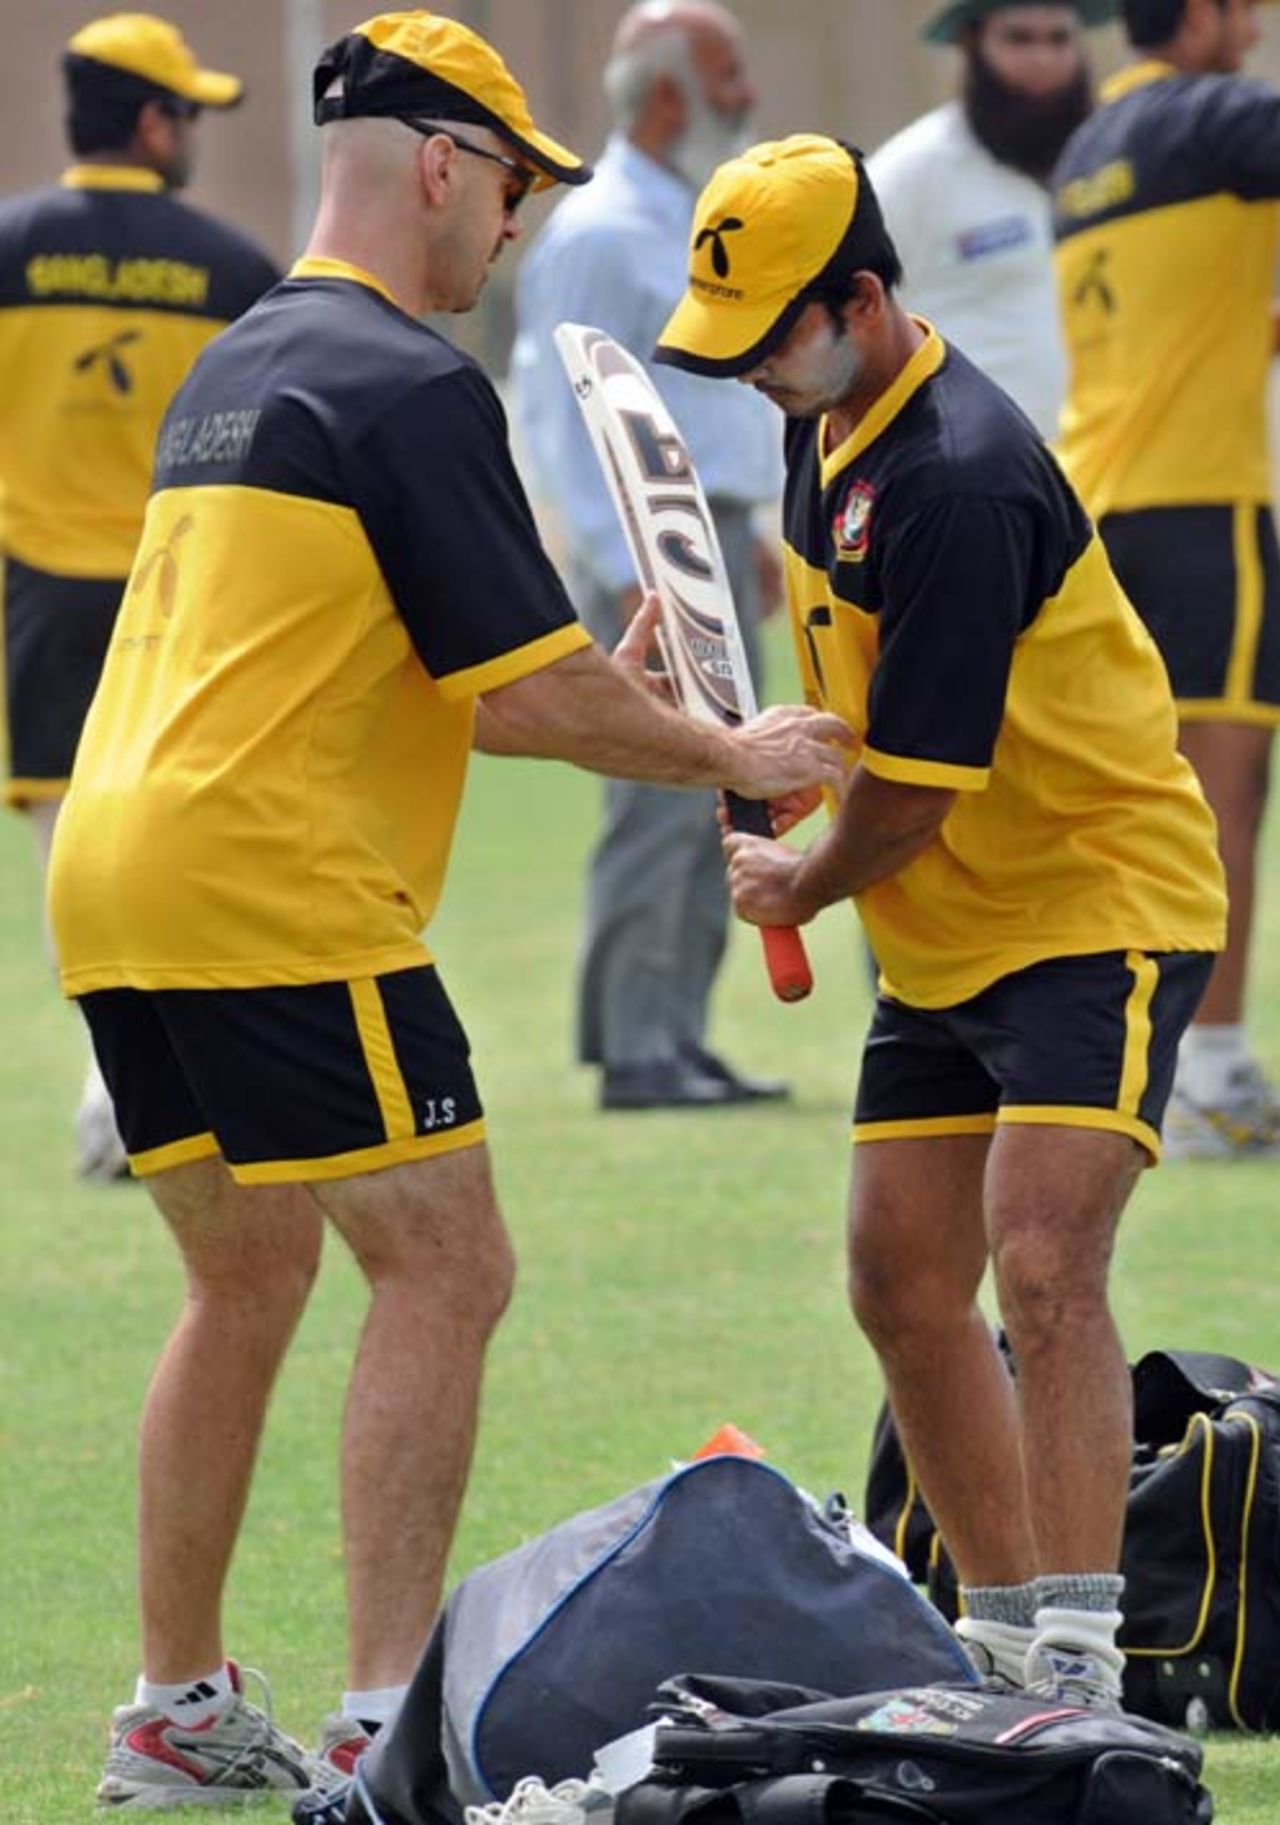 Bangladesh coach Jamie Siddons gives Nazimuddin some batting tips during a practice session, Karachi, July 2, 2008